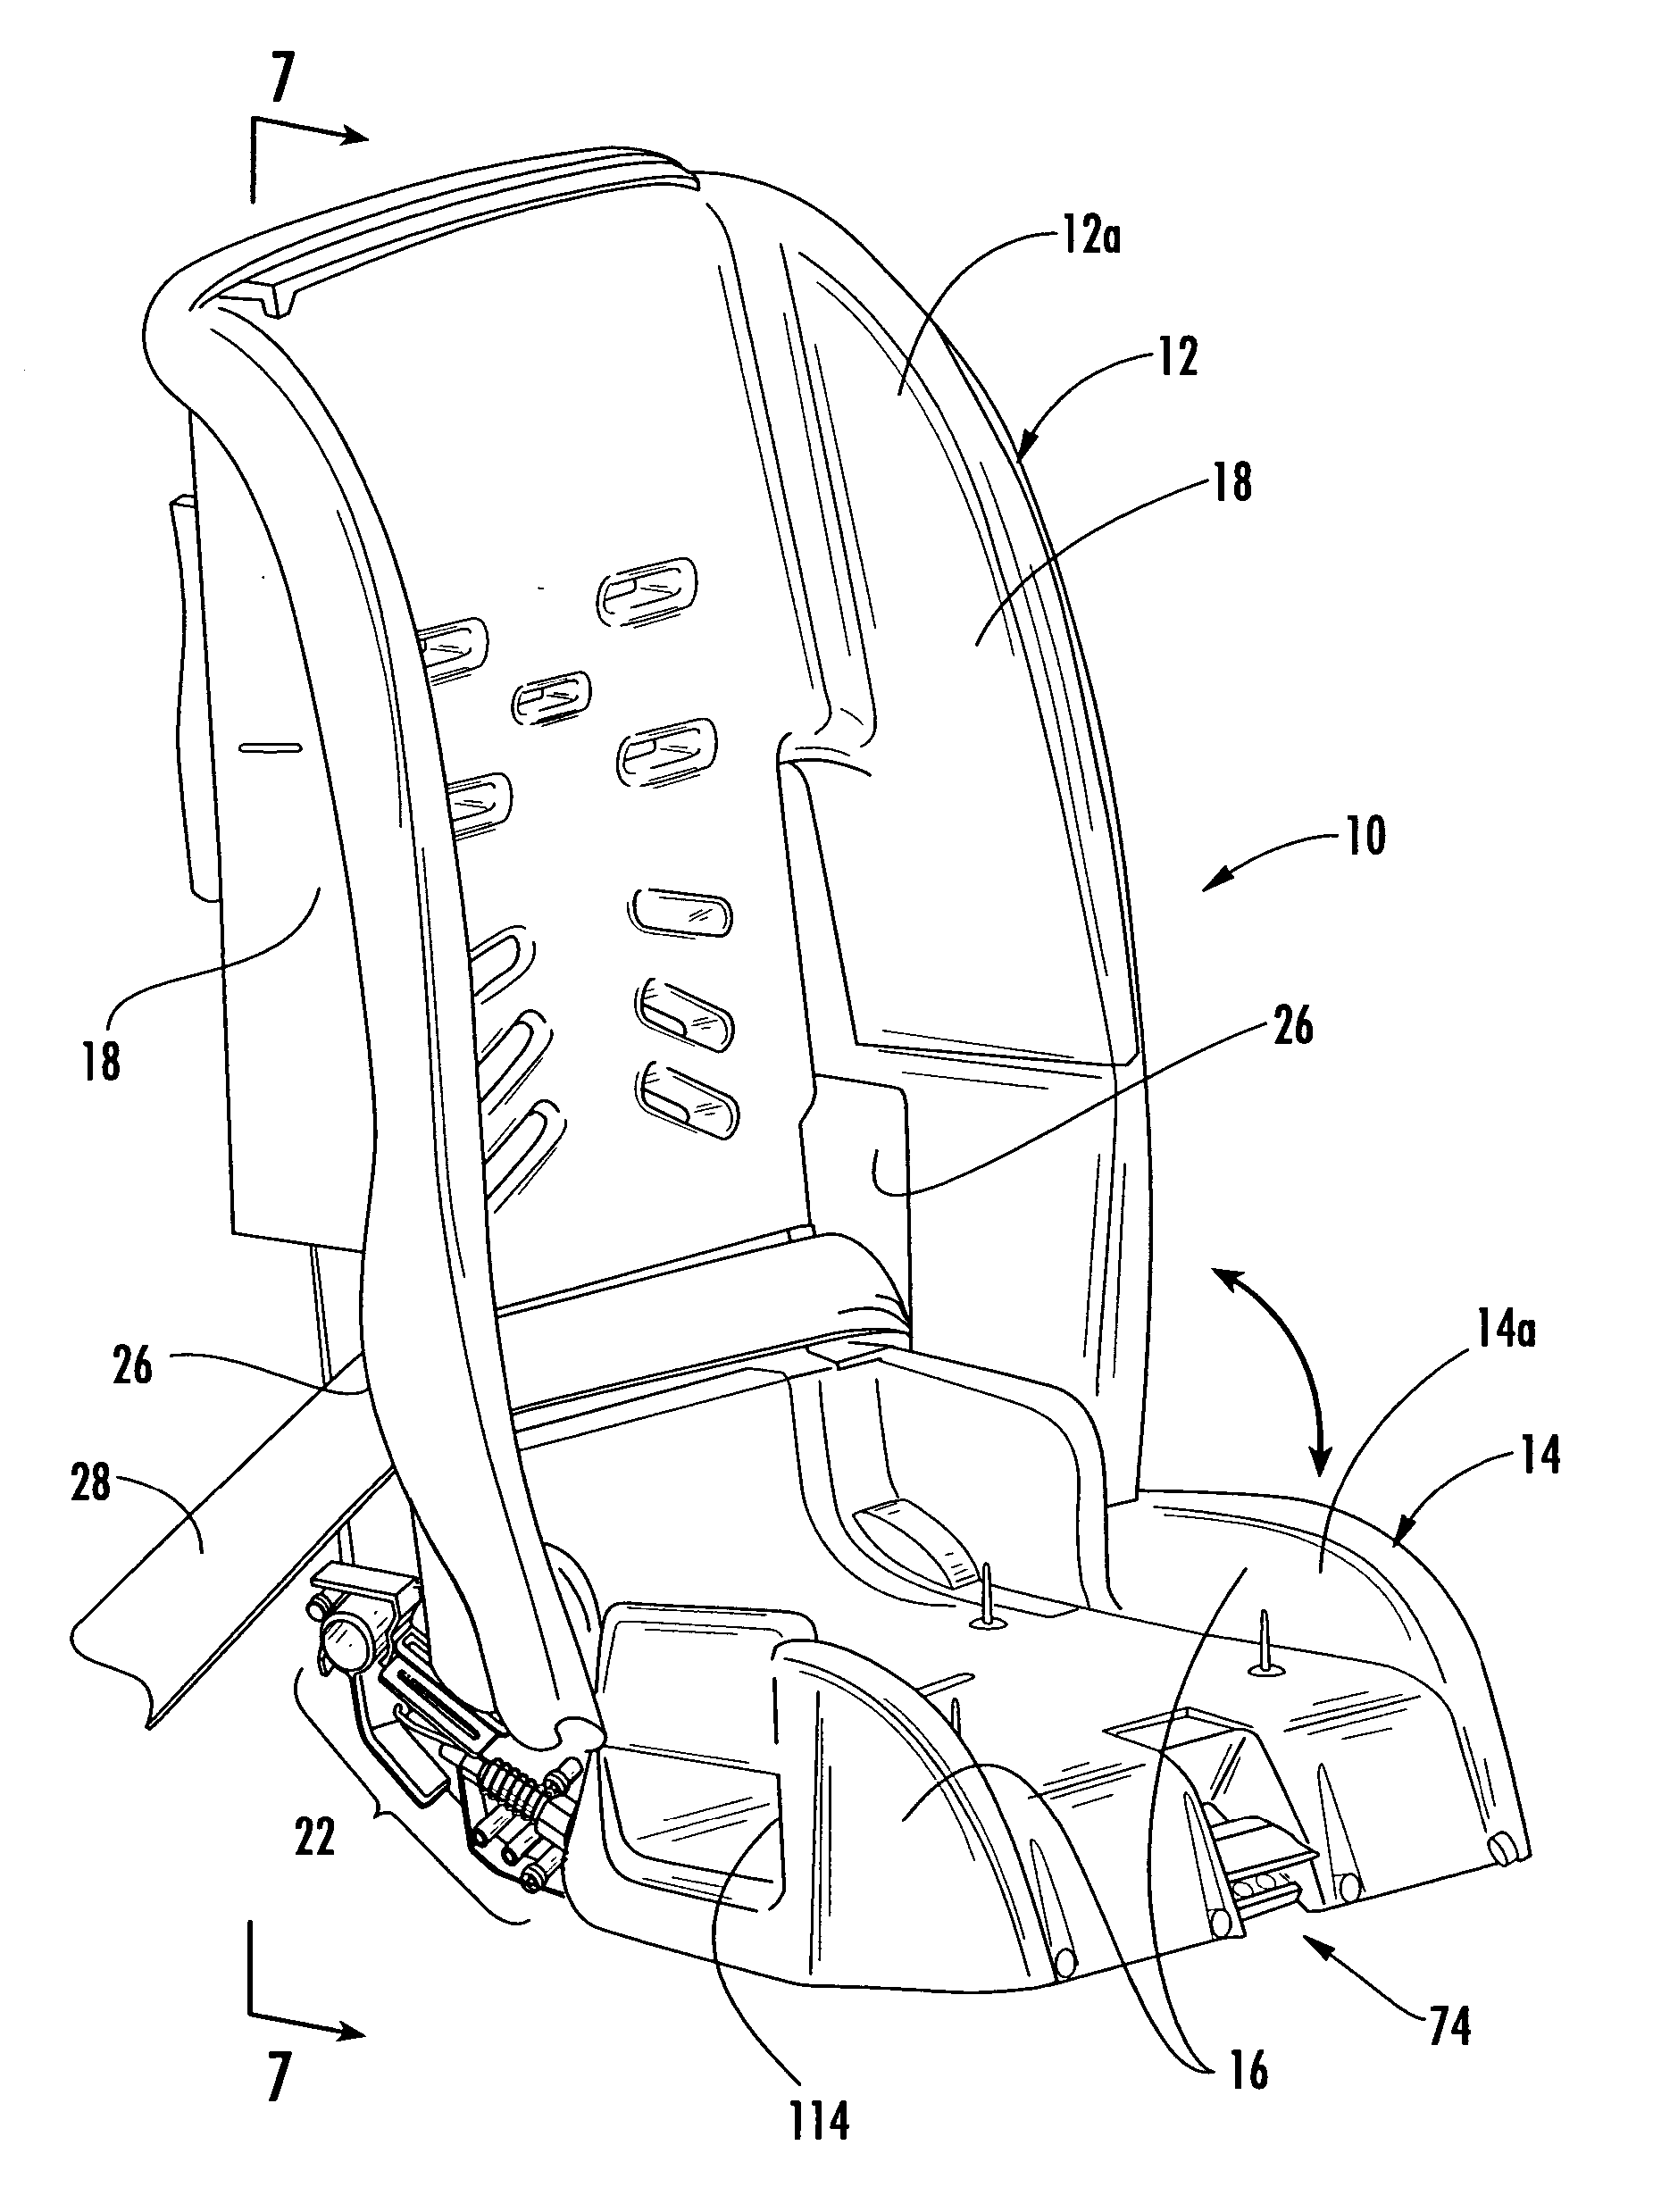 Compact folding seat